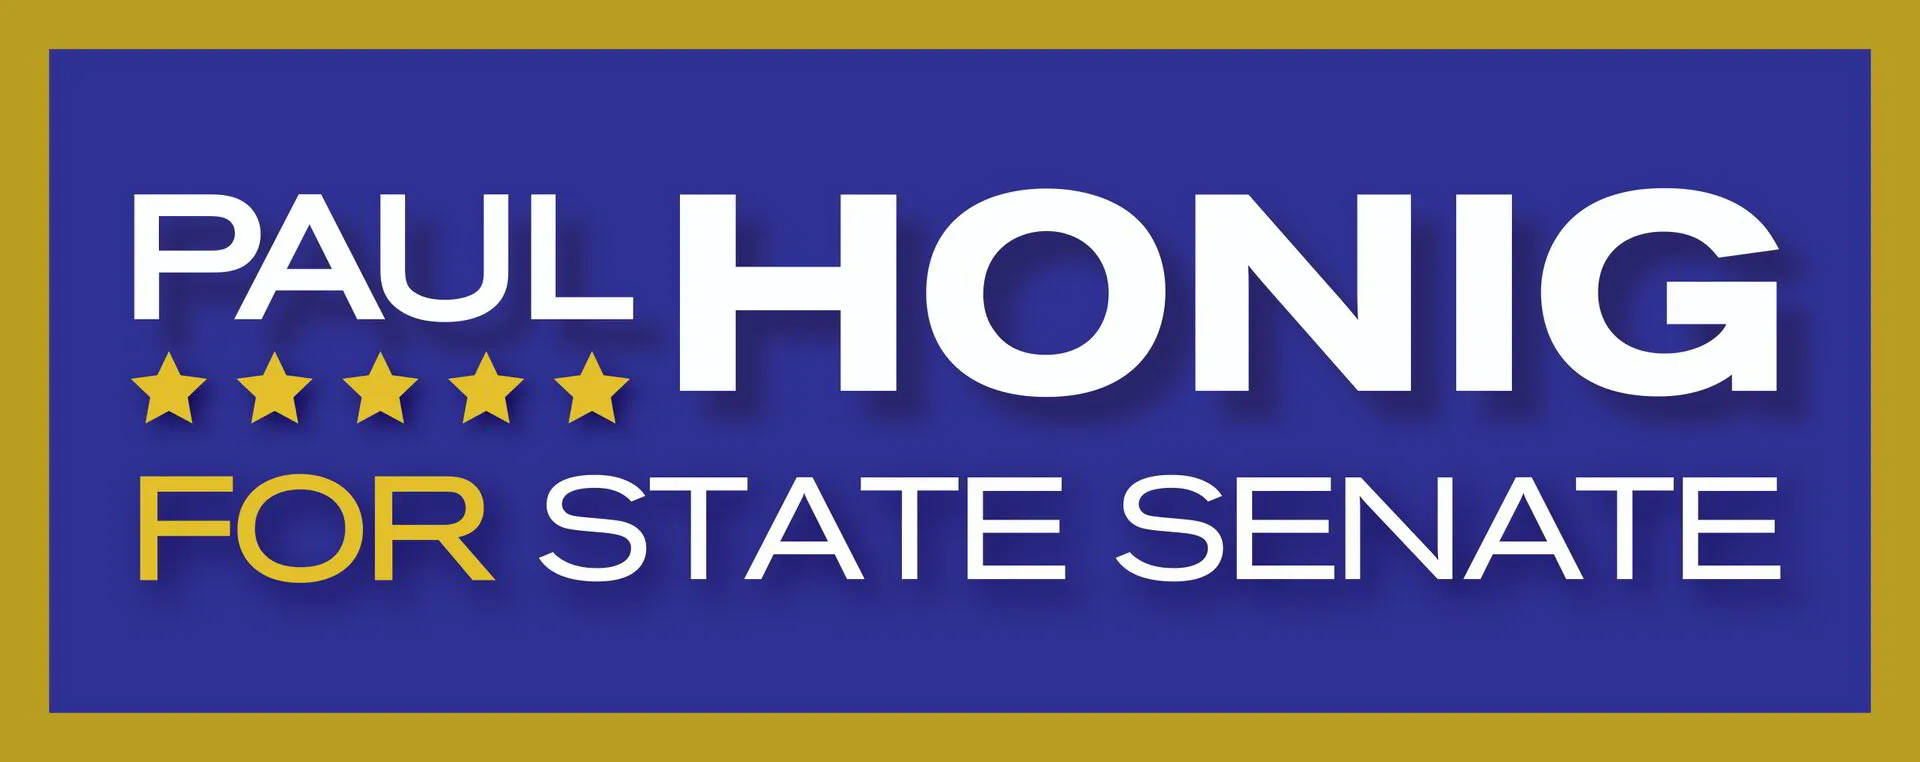 Paul Honig for State Senate